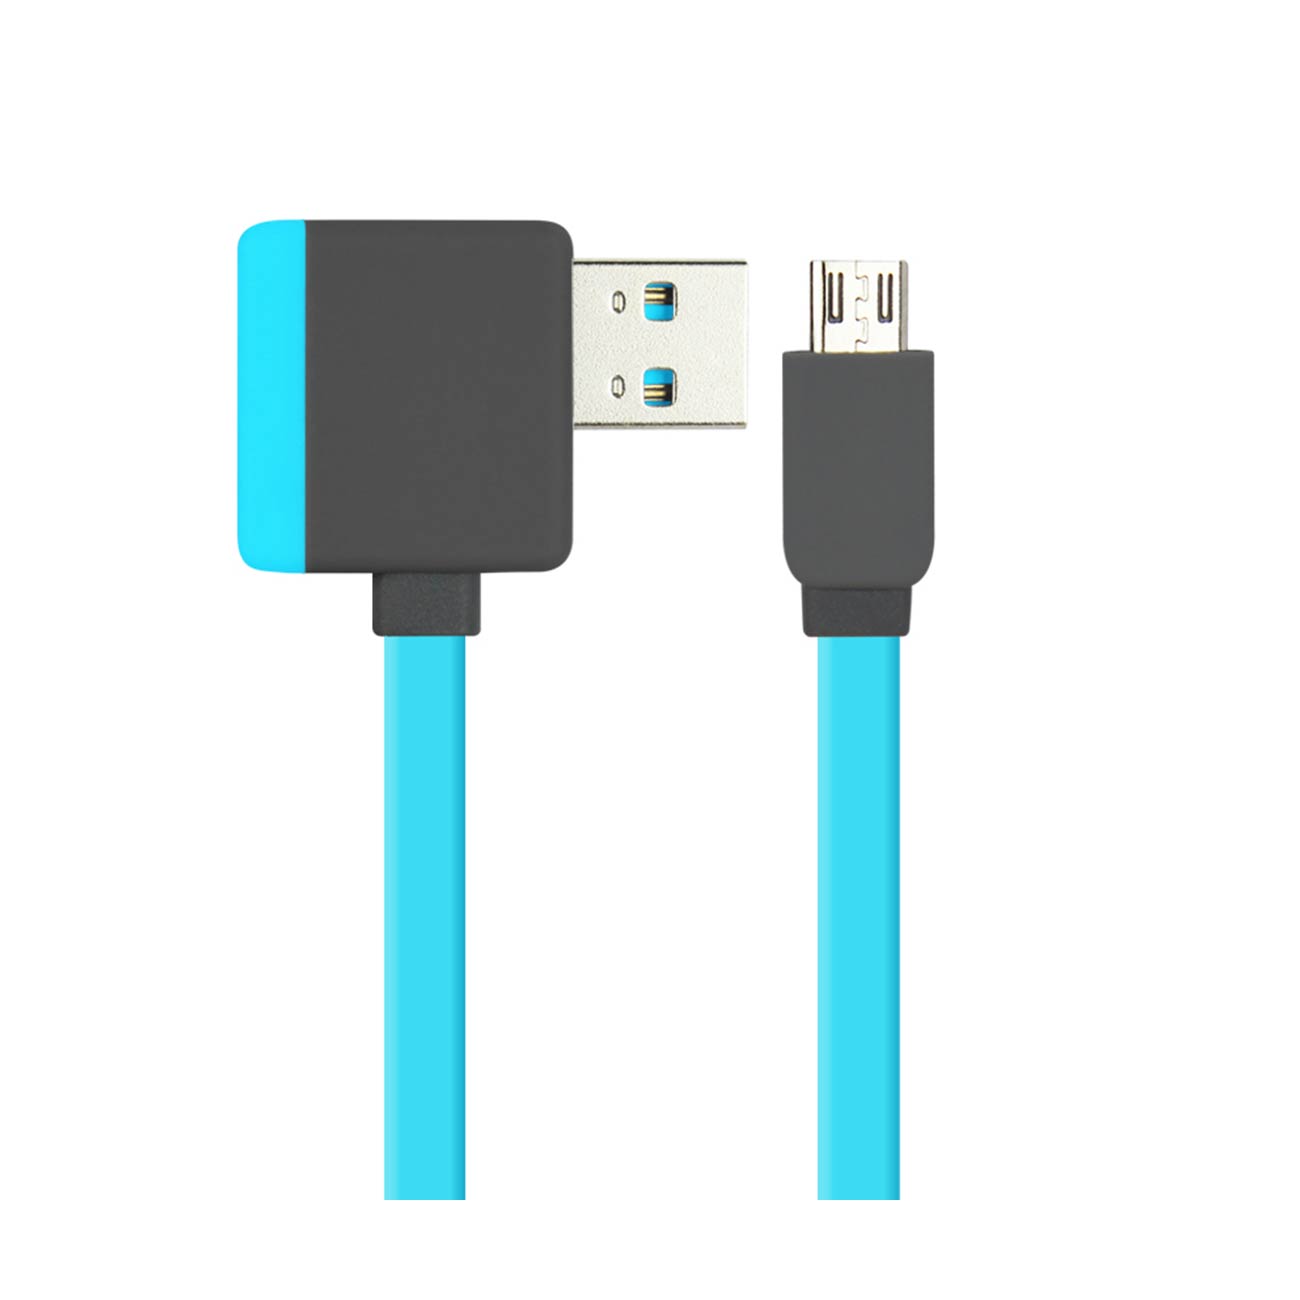 Cable USB Micro Piggyback Flat Liberator 3.2Ft Blue Color